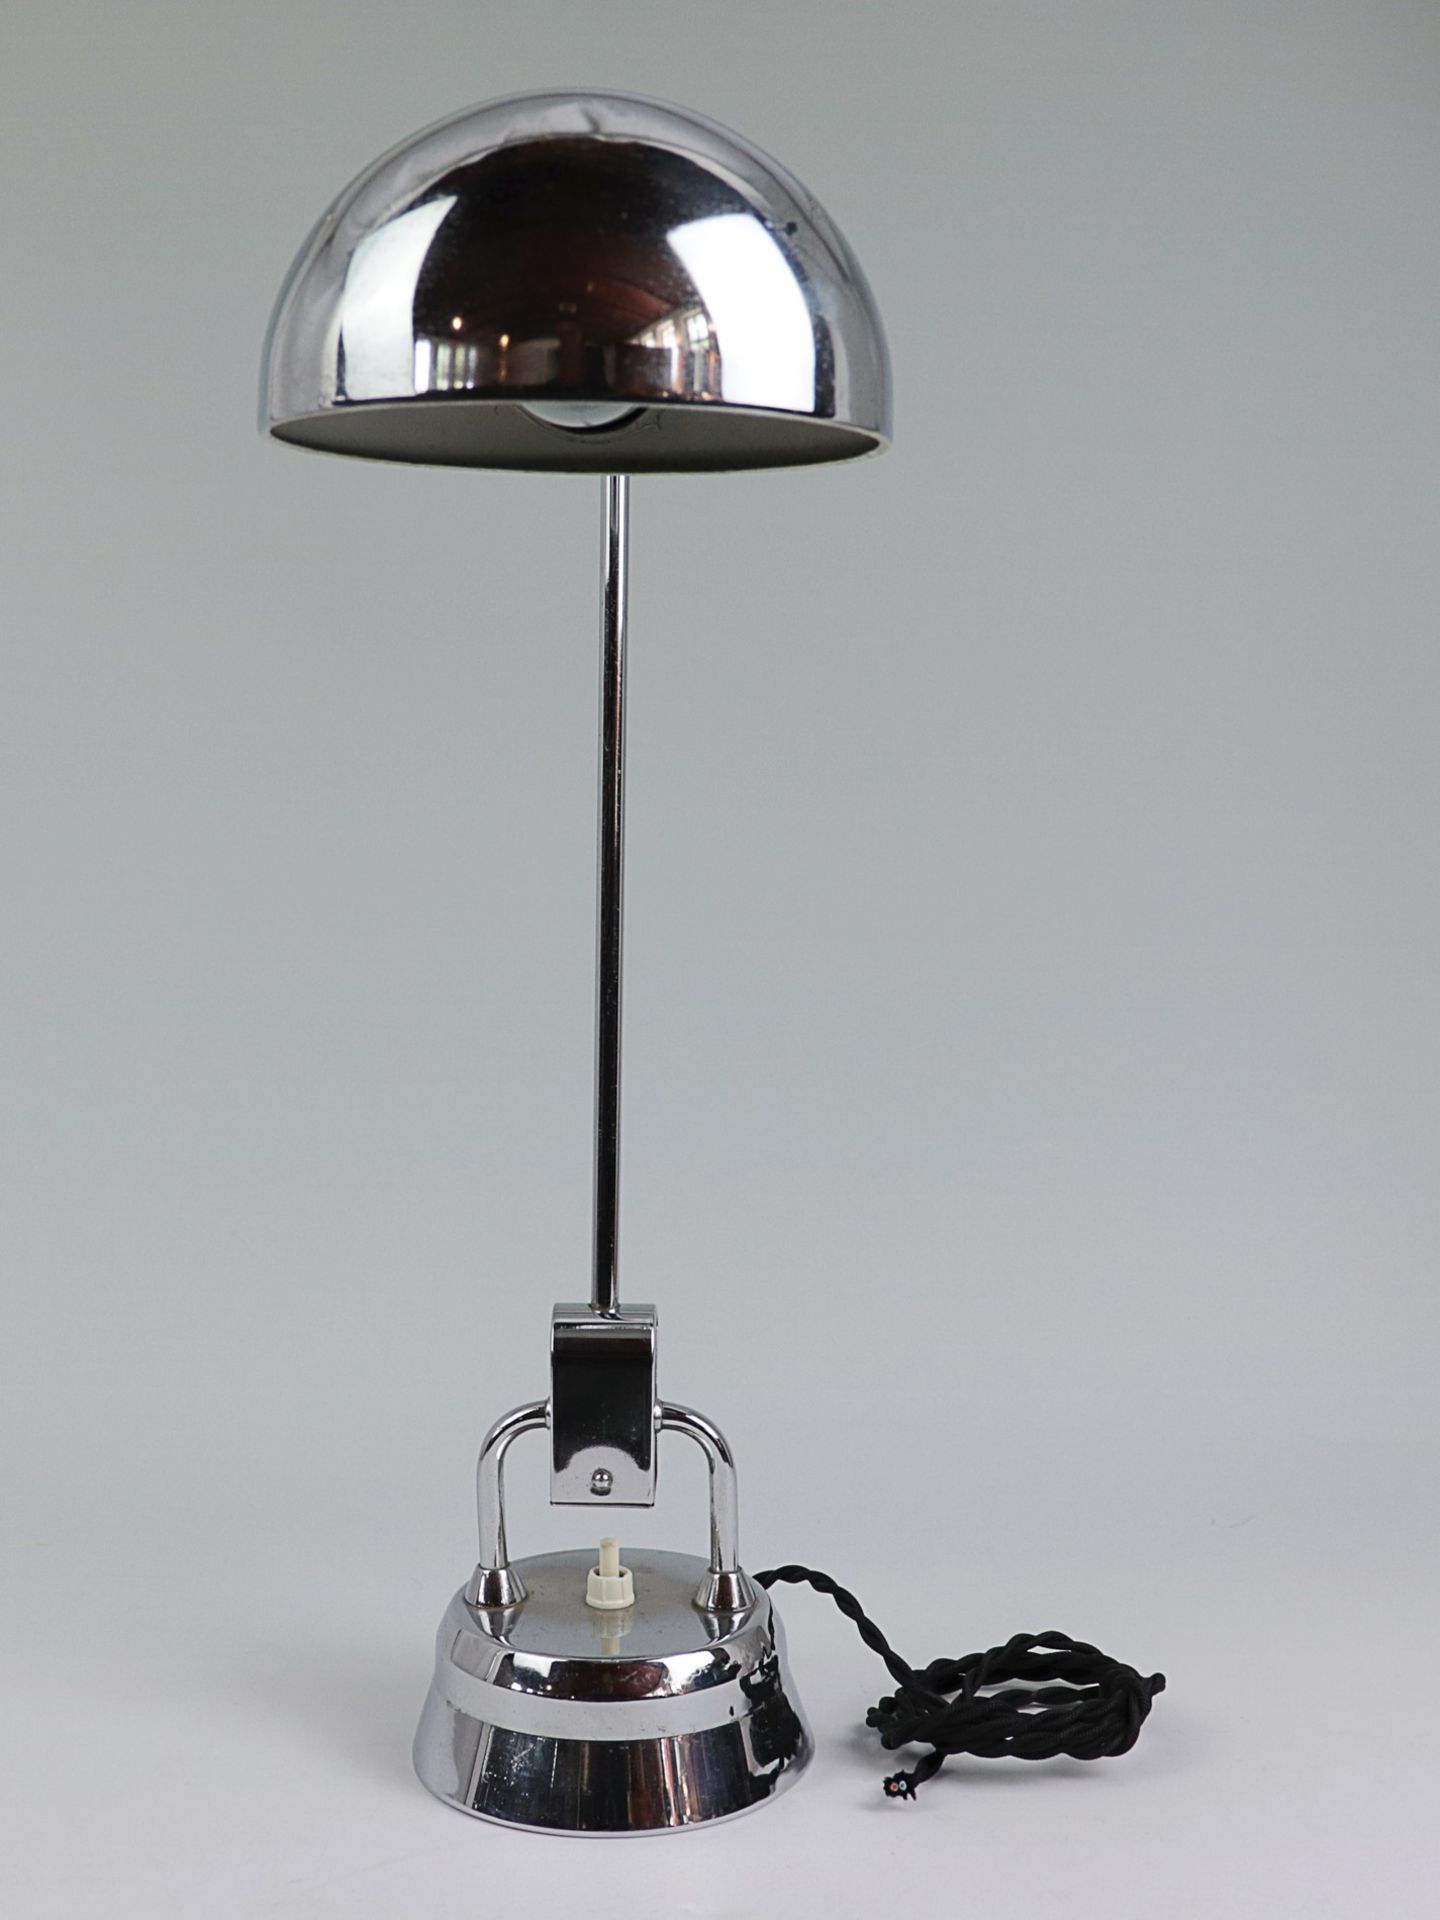 Tischlampe 1930er J., Entwurf wohl Charlotte Perriand, Metall, verchromt, einflammig,